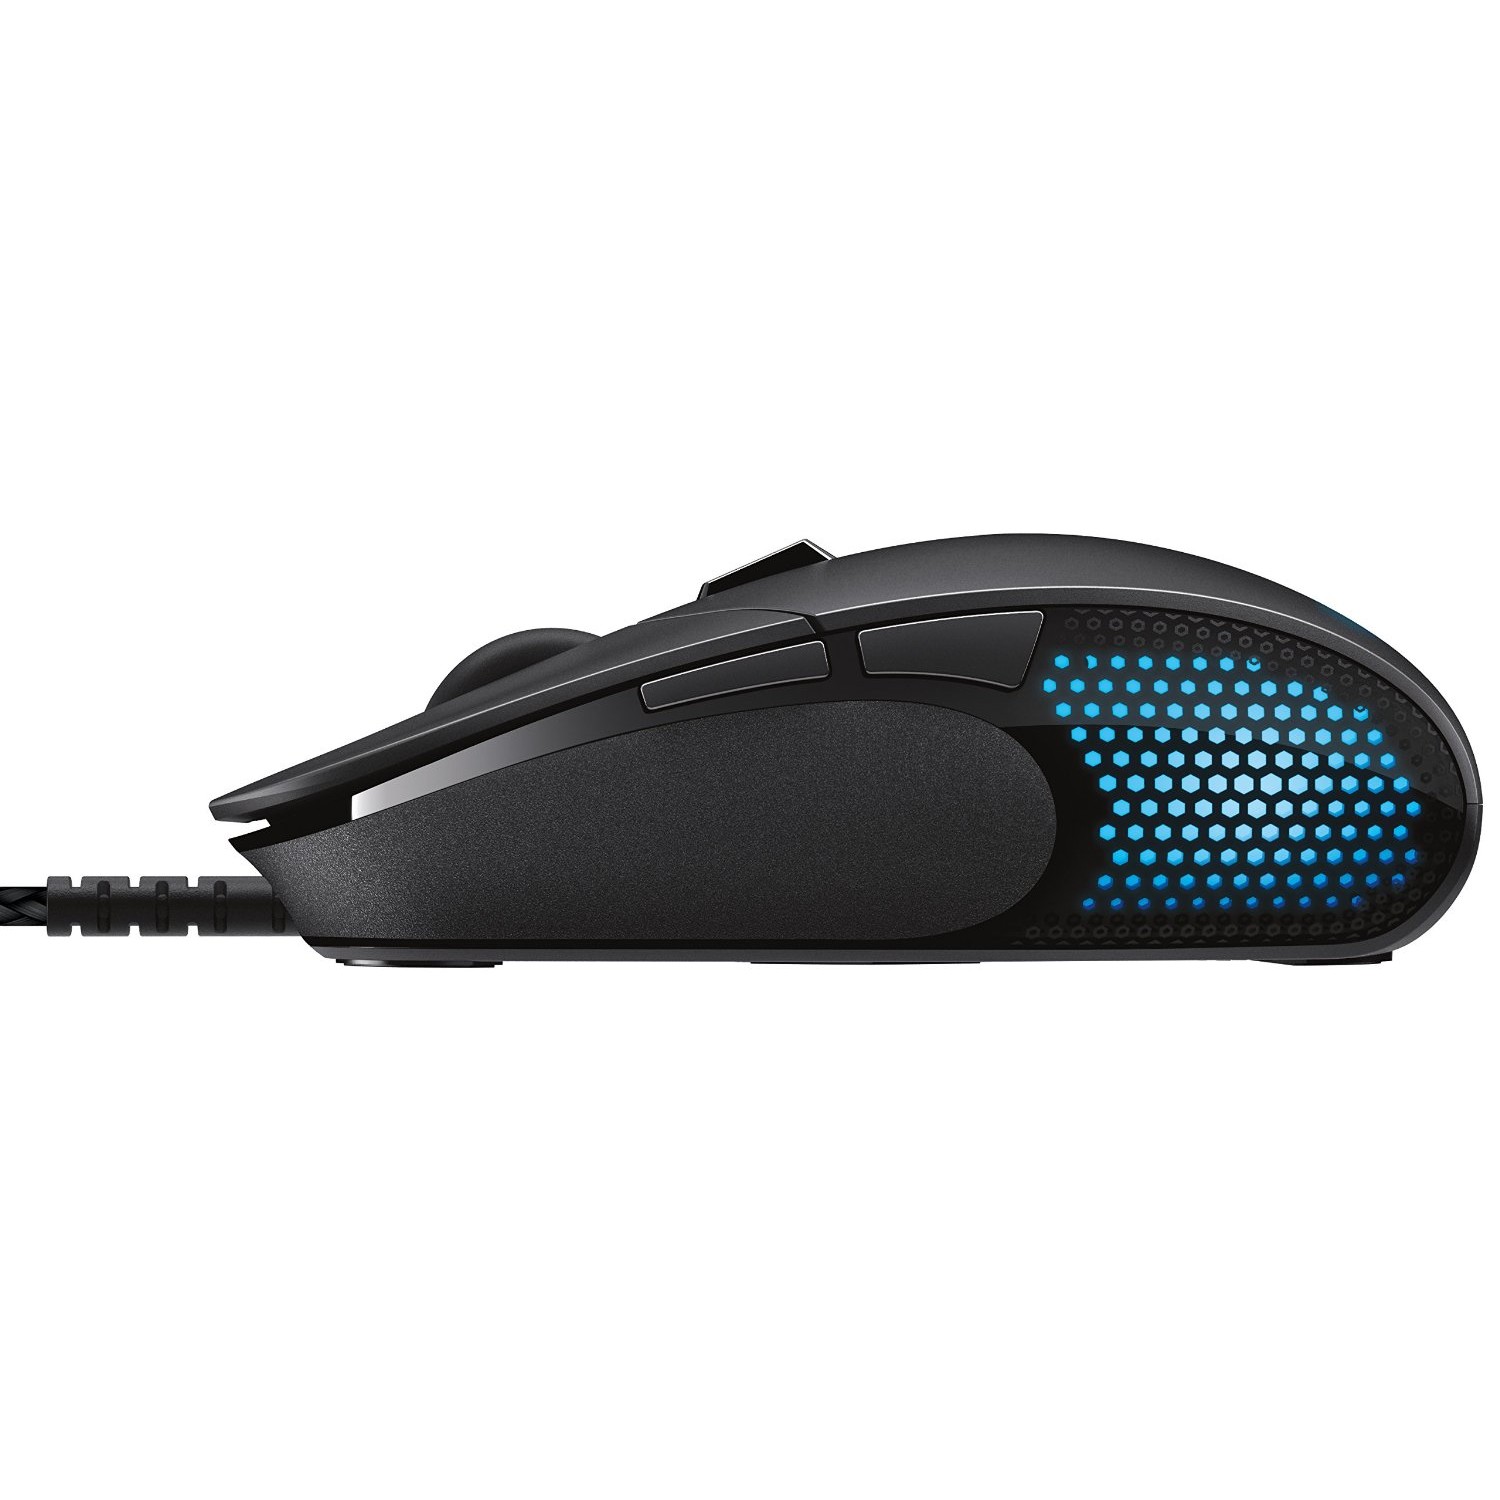 Logitech G303 Daedalus Apex Gaming Mouse-3